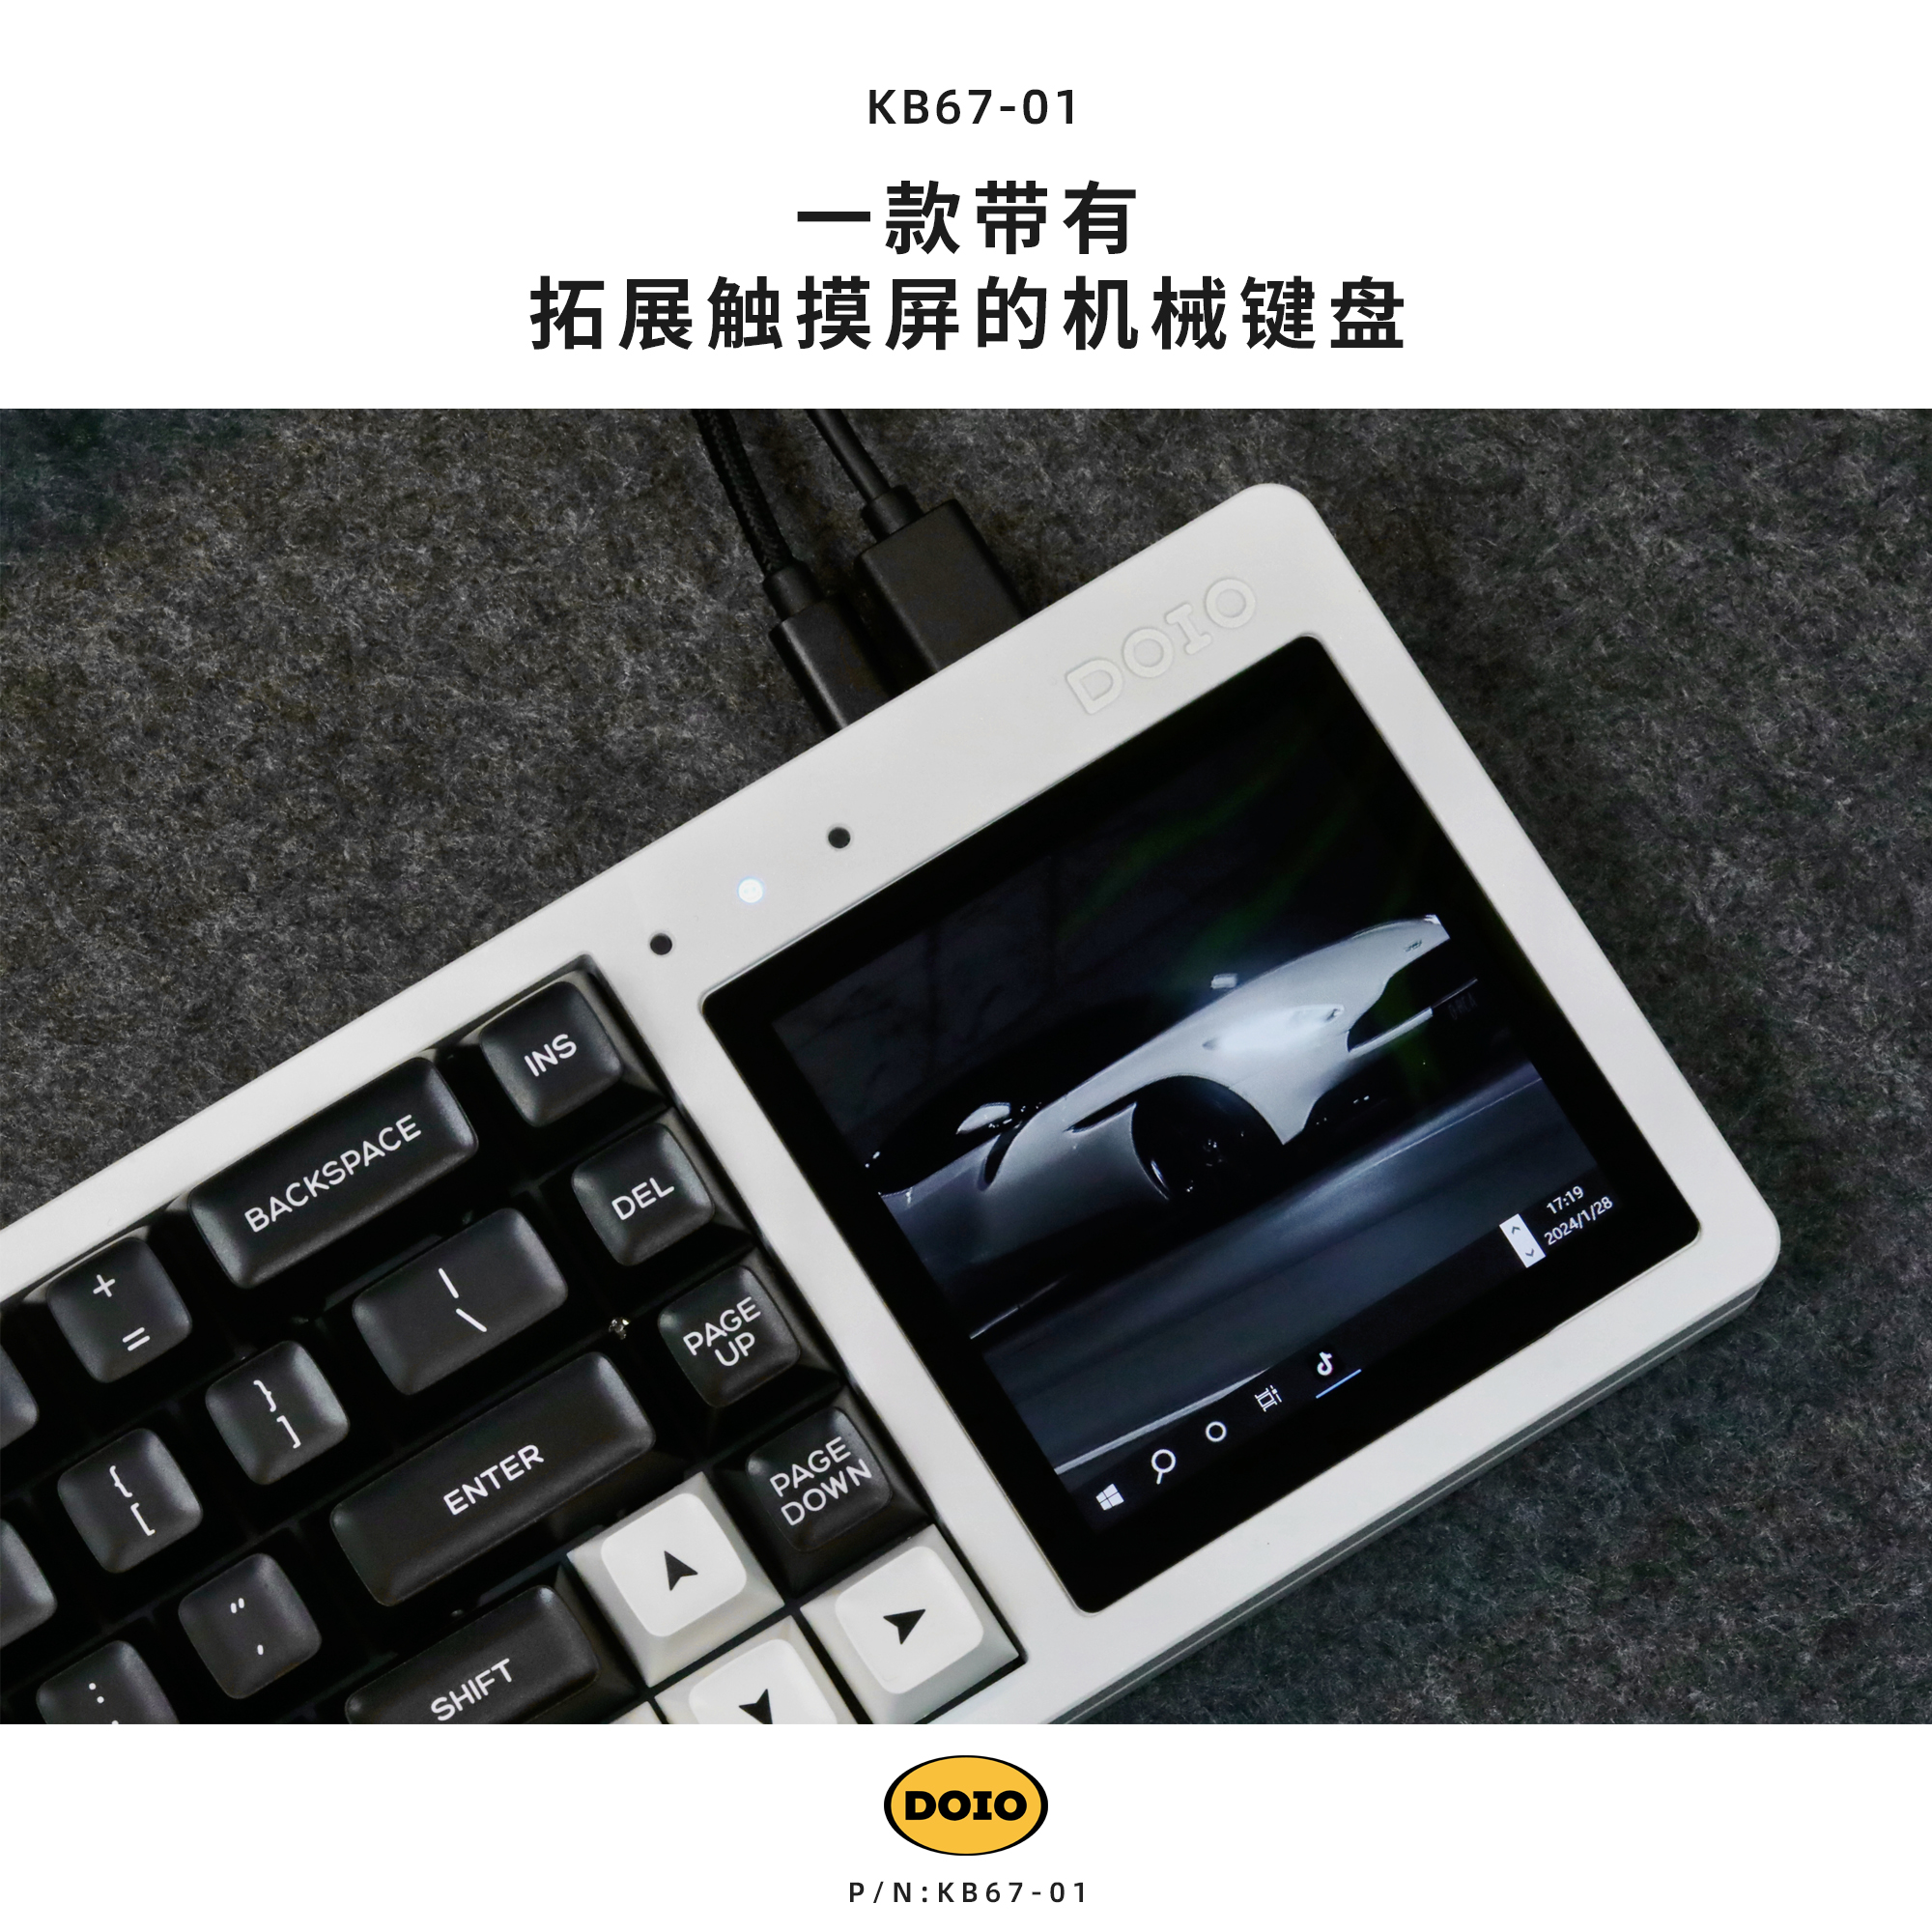 DOIO67键机械键盘套件可触摸拓展屏铝合金可编程机械键盘 KB67-01